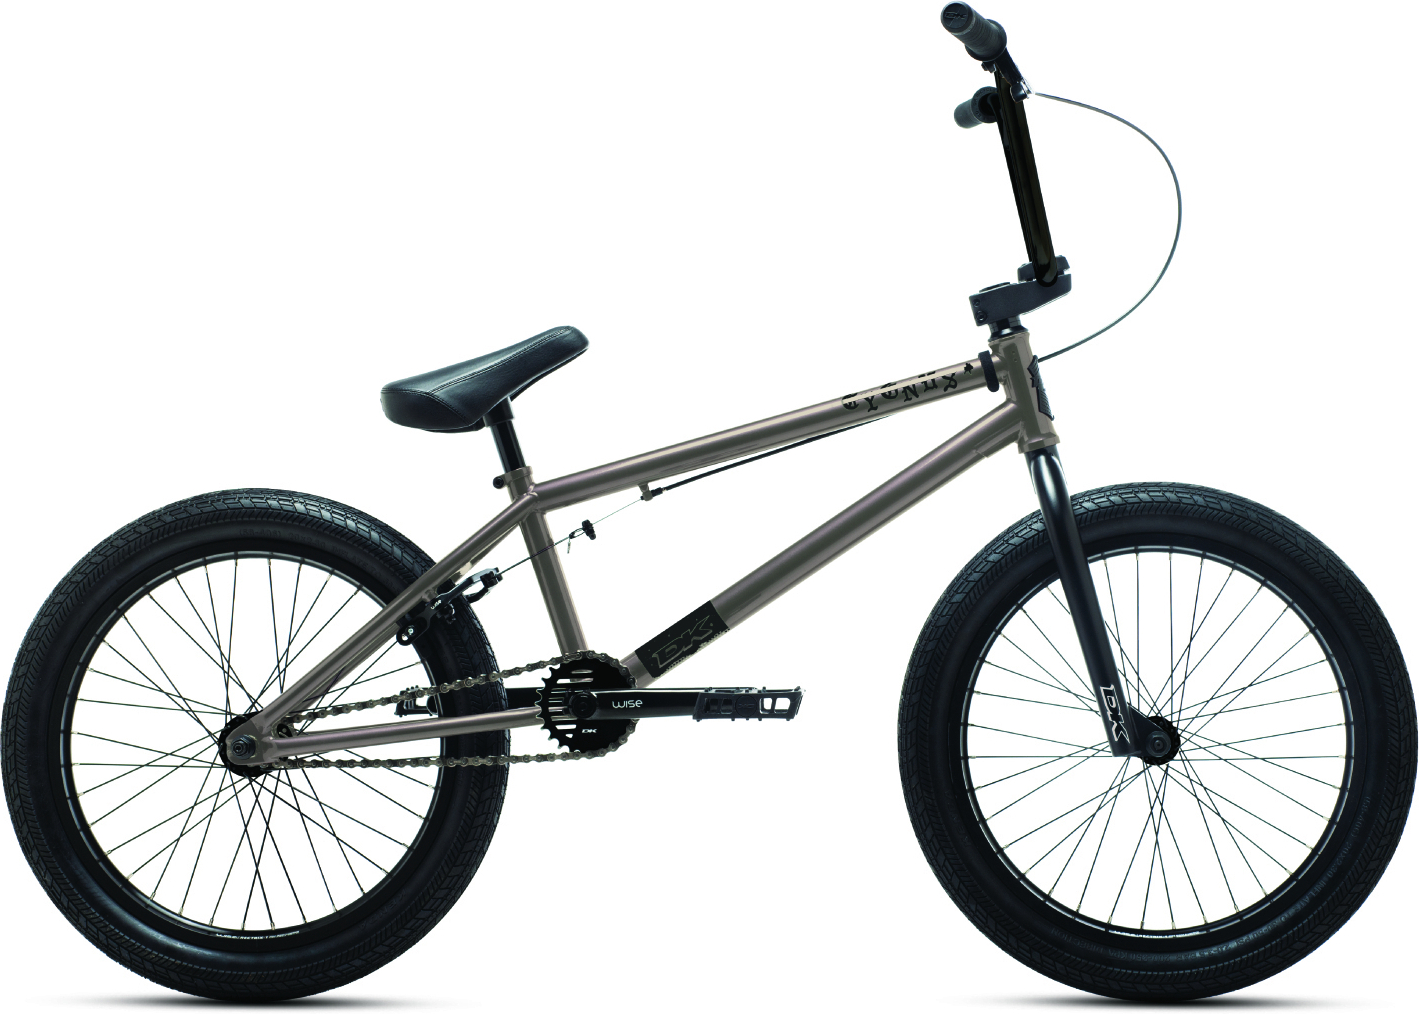 DK Cygnus bike 20" • Street-Sport-Equipment